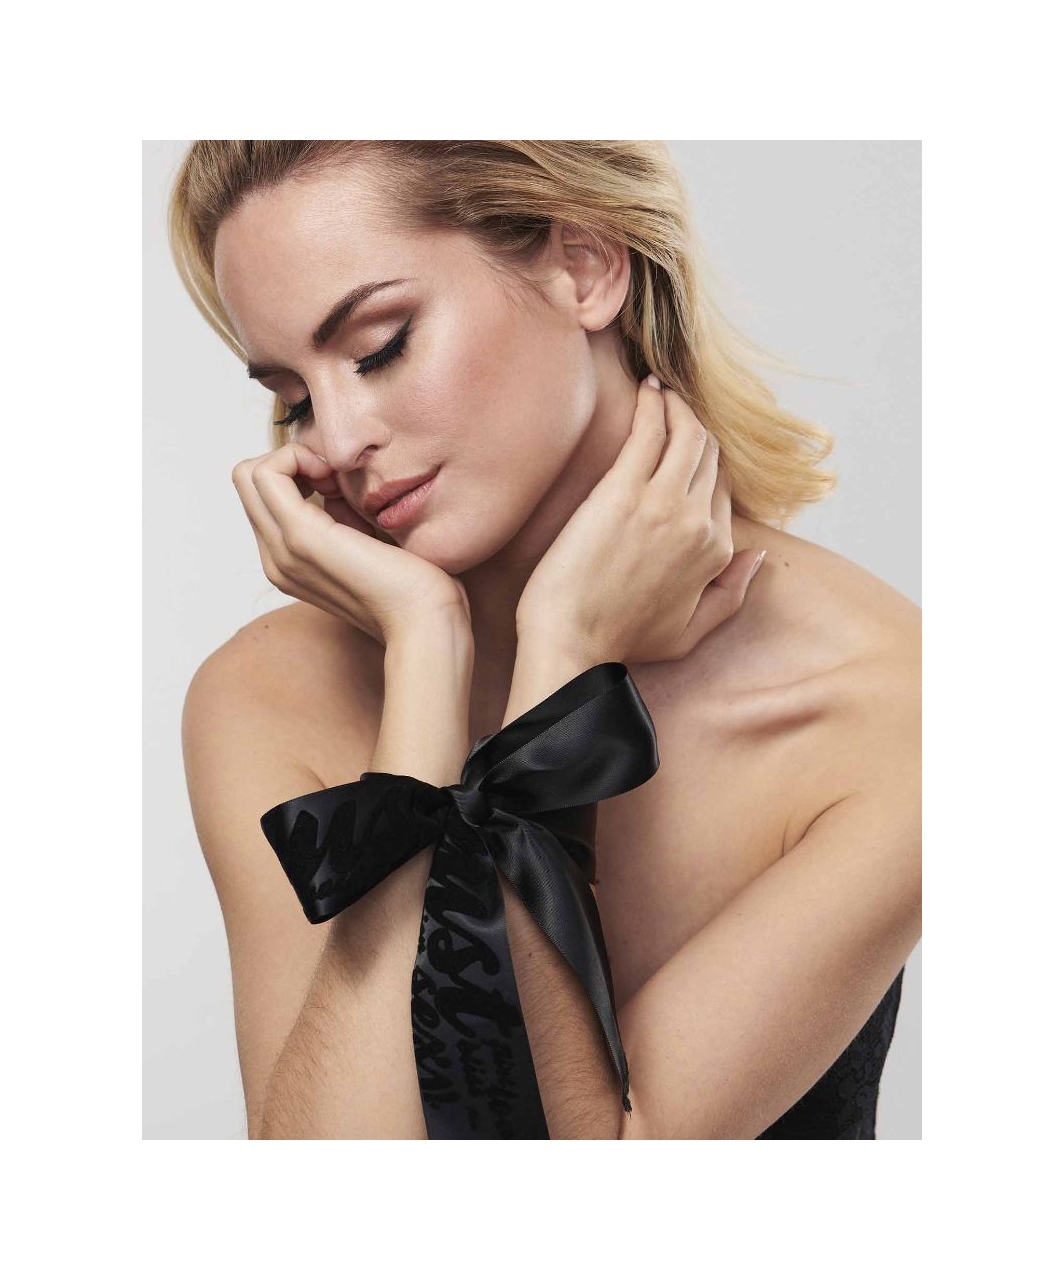 Bijoux Indiscrets Silky Sensual black satin wrist ties